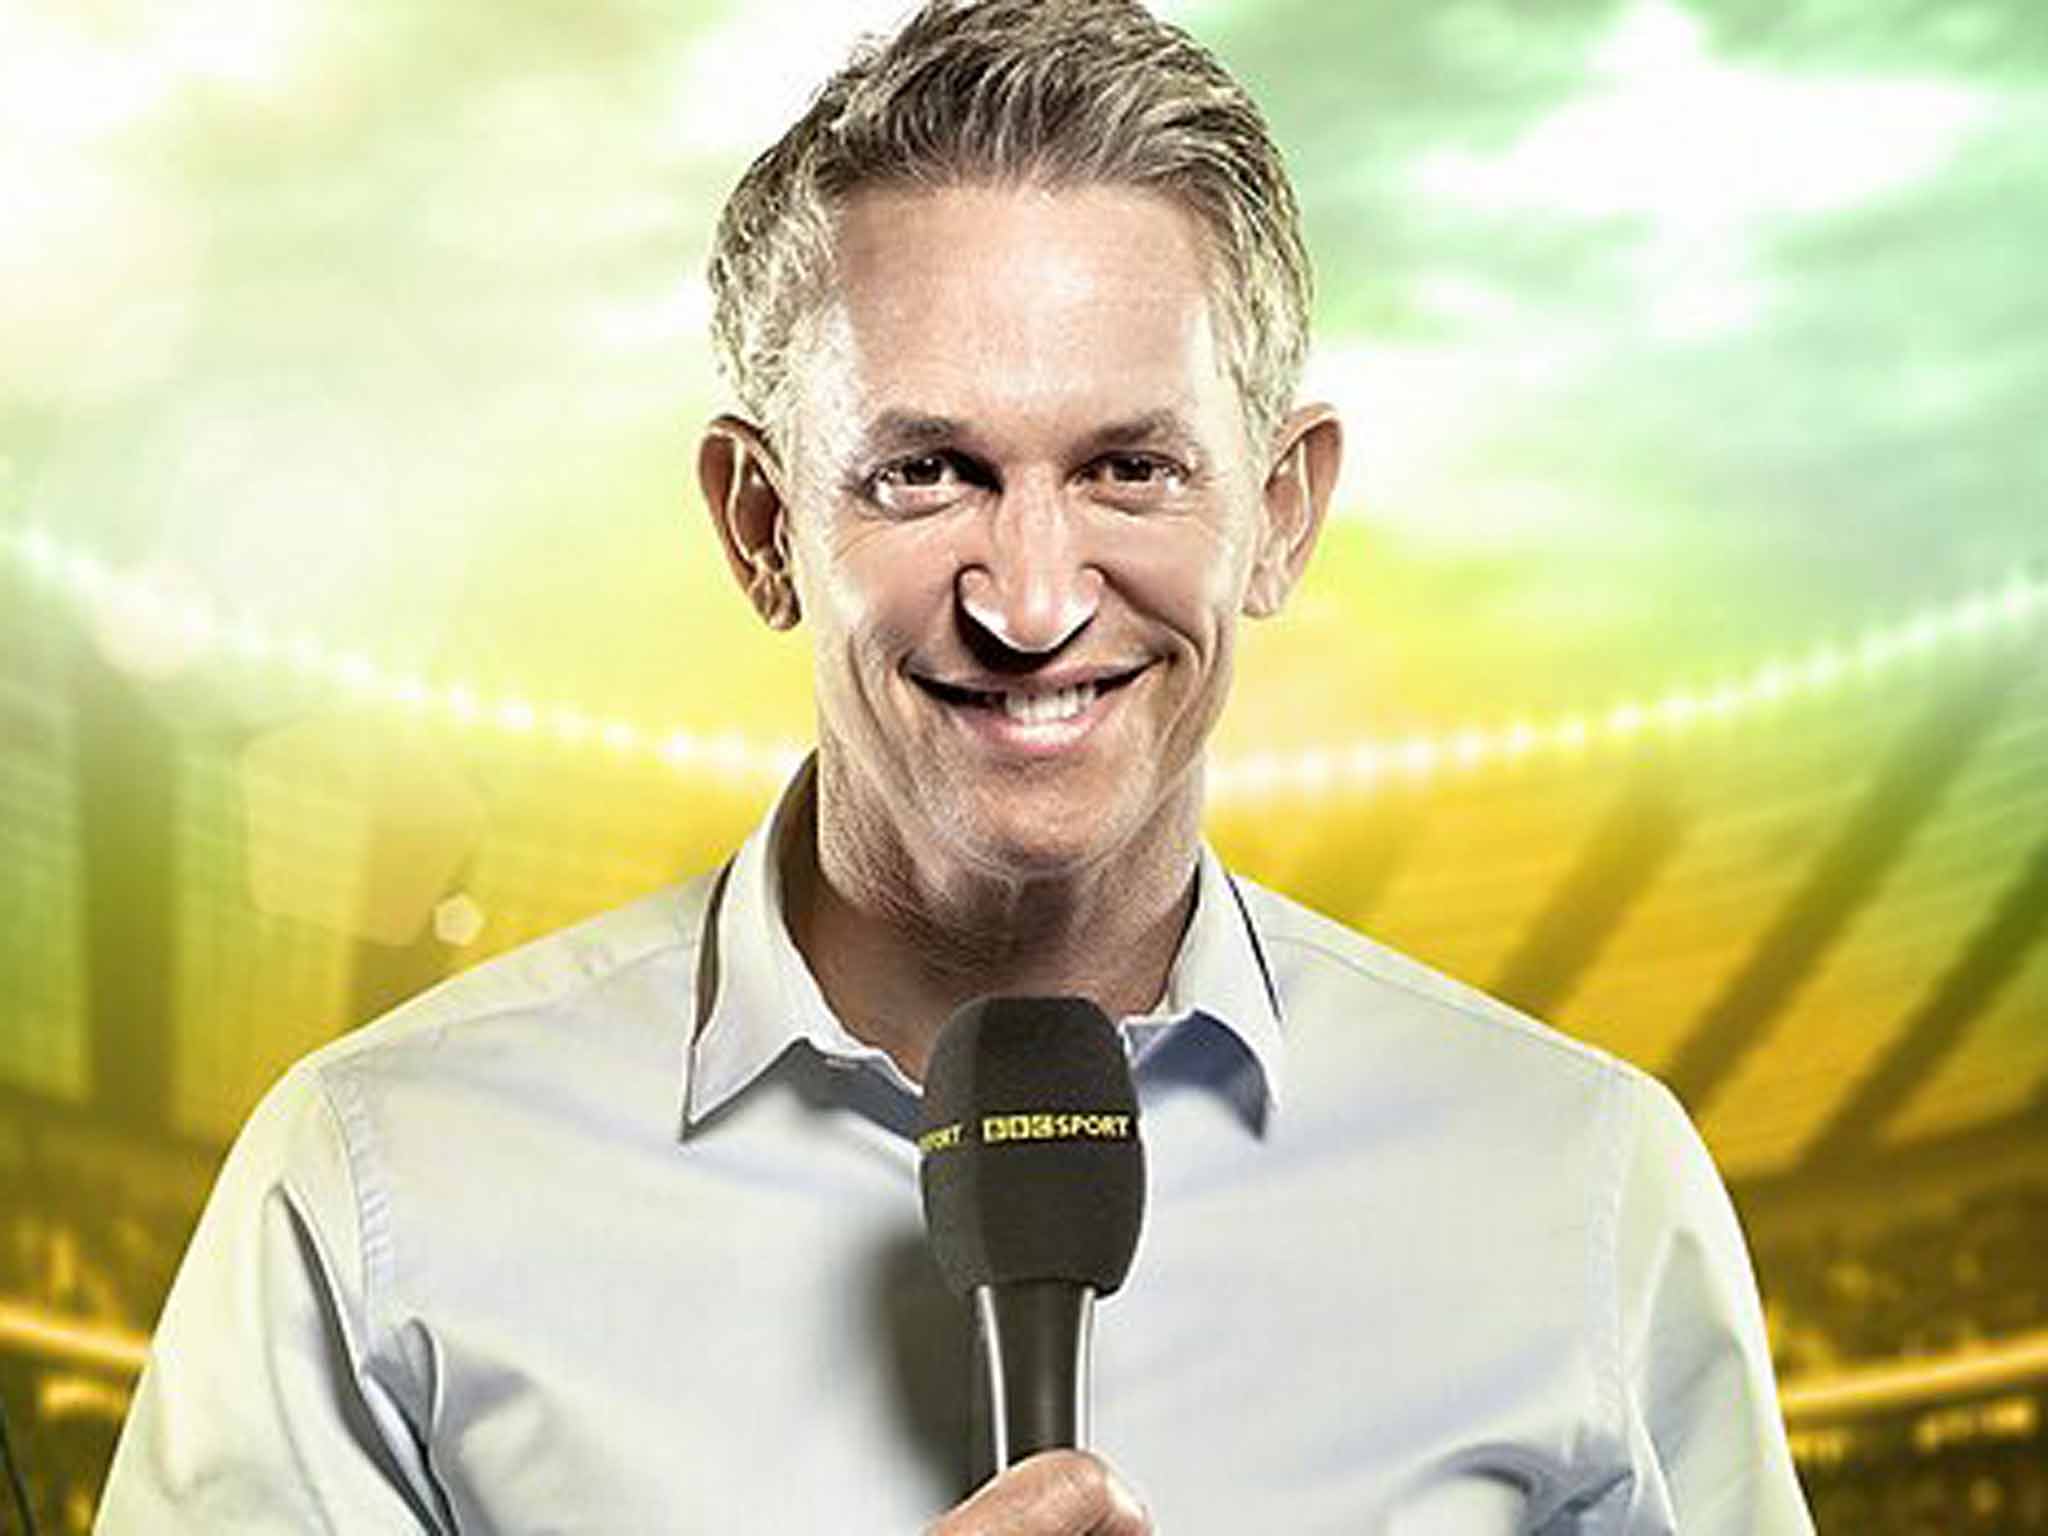 BBC Match of the Day host Gary Lineker